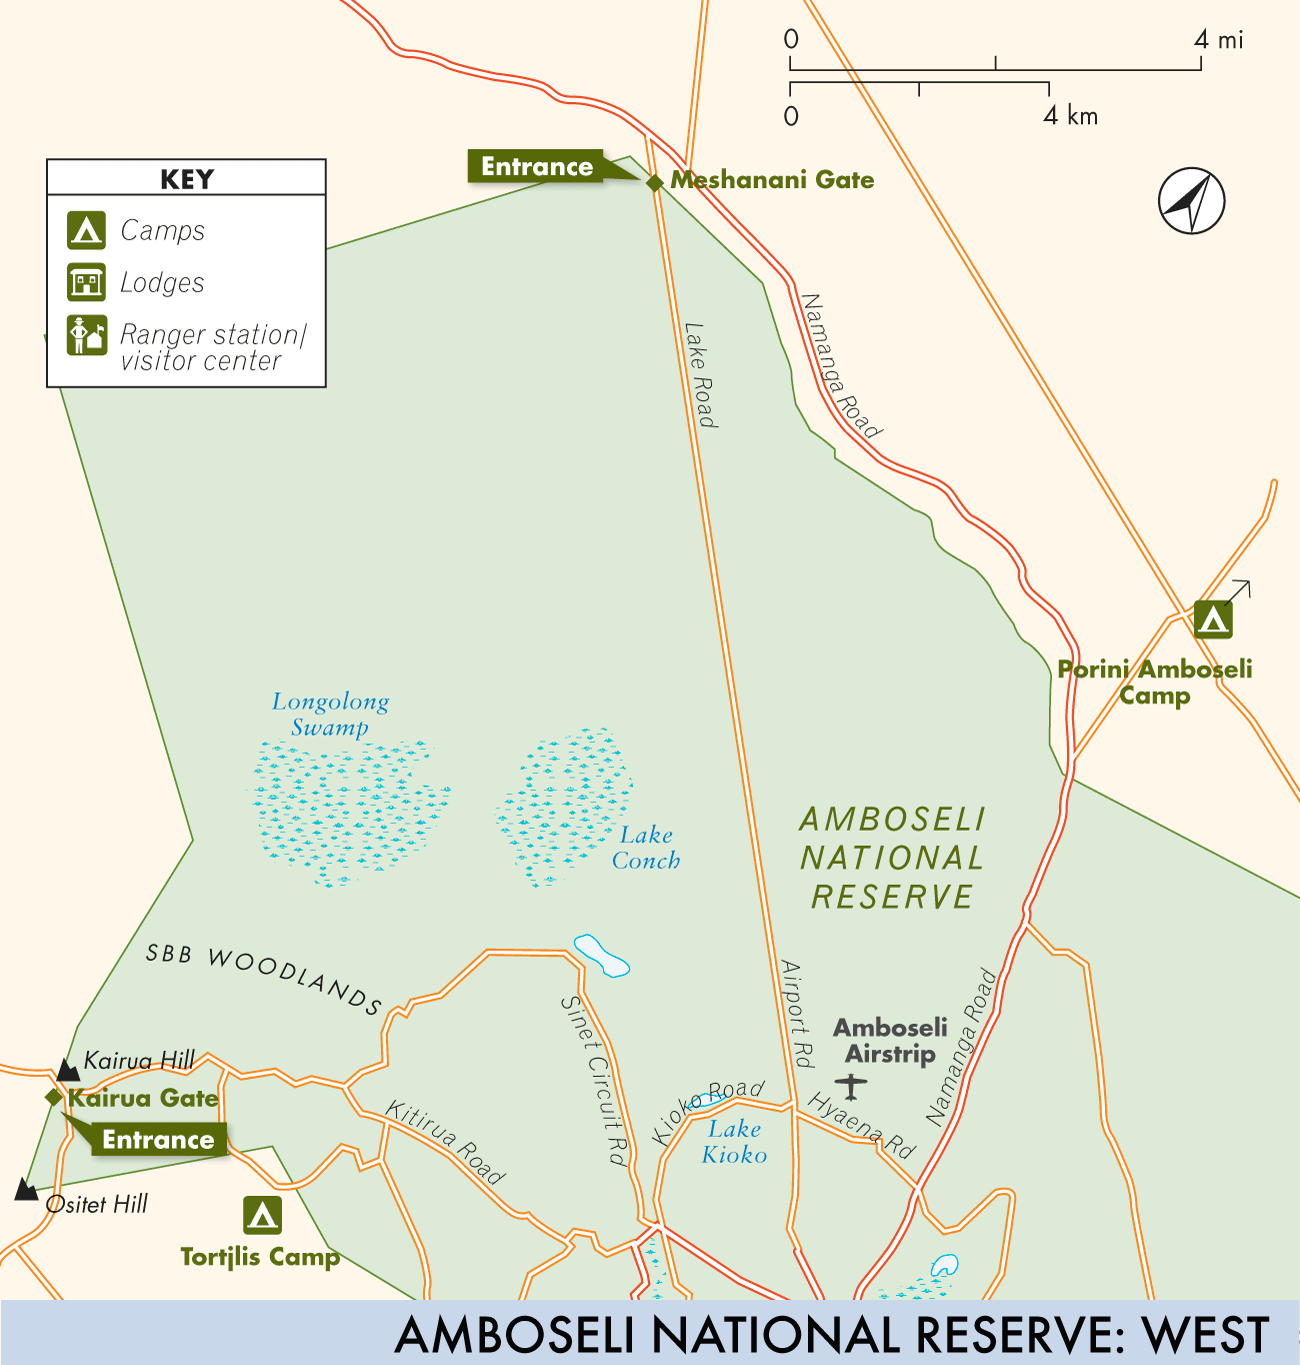 Amboseli National Reserve: West